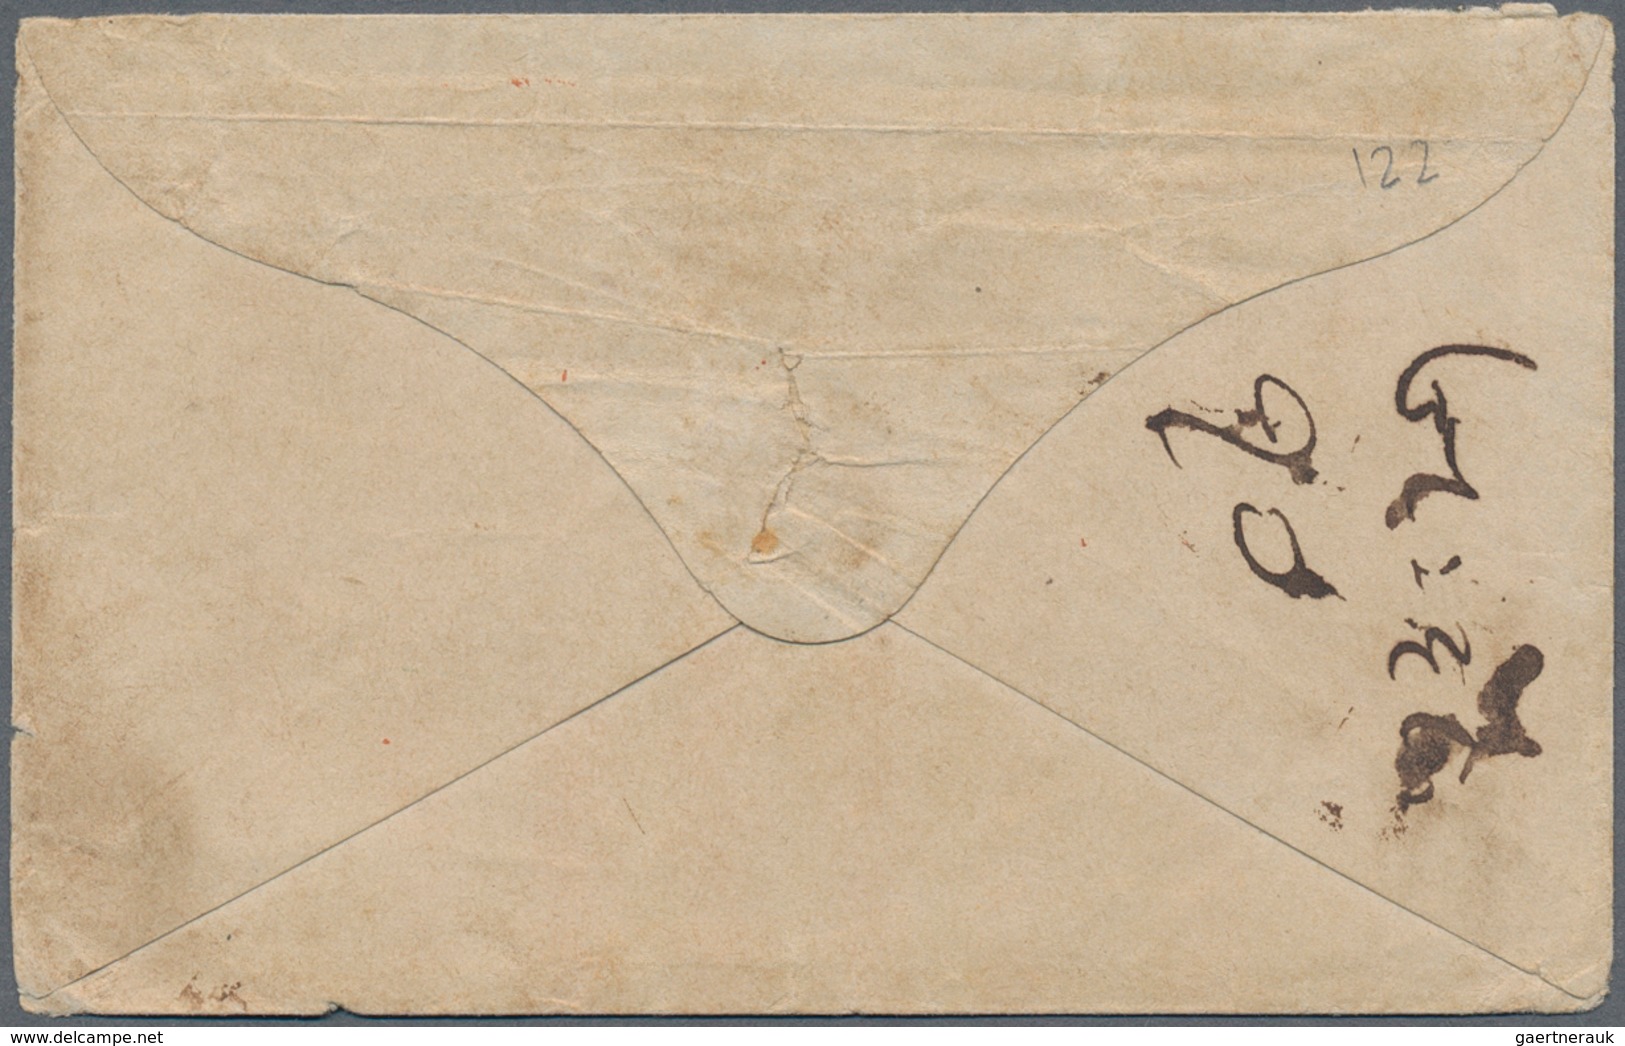 Aden: 1847-60's: Boxed Shipletter Handstamp "ADEN/SHIPLETTER//PAID" In Red (Proud SL2), Used At Aden - Aden (1854-1963)